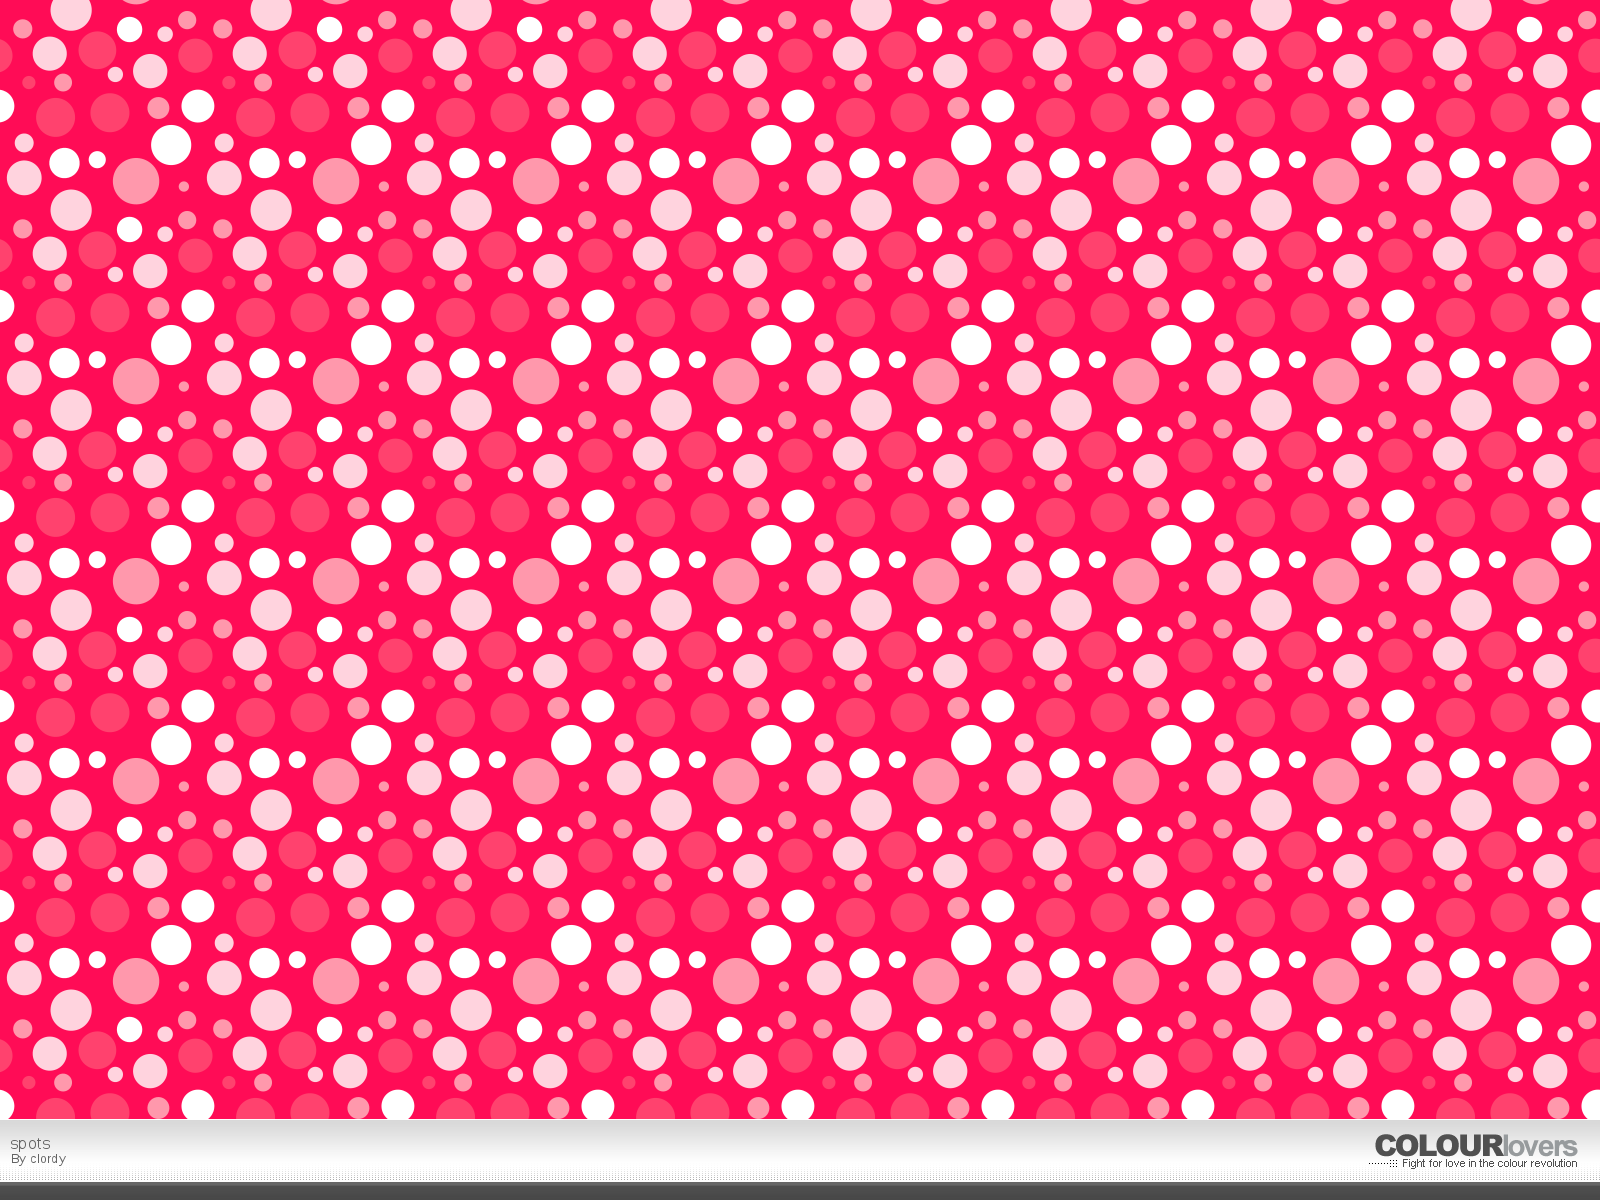 49+] Pink Pattern Wallpaper - WallpaperSafari